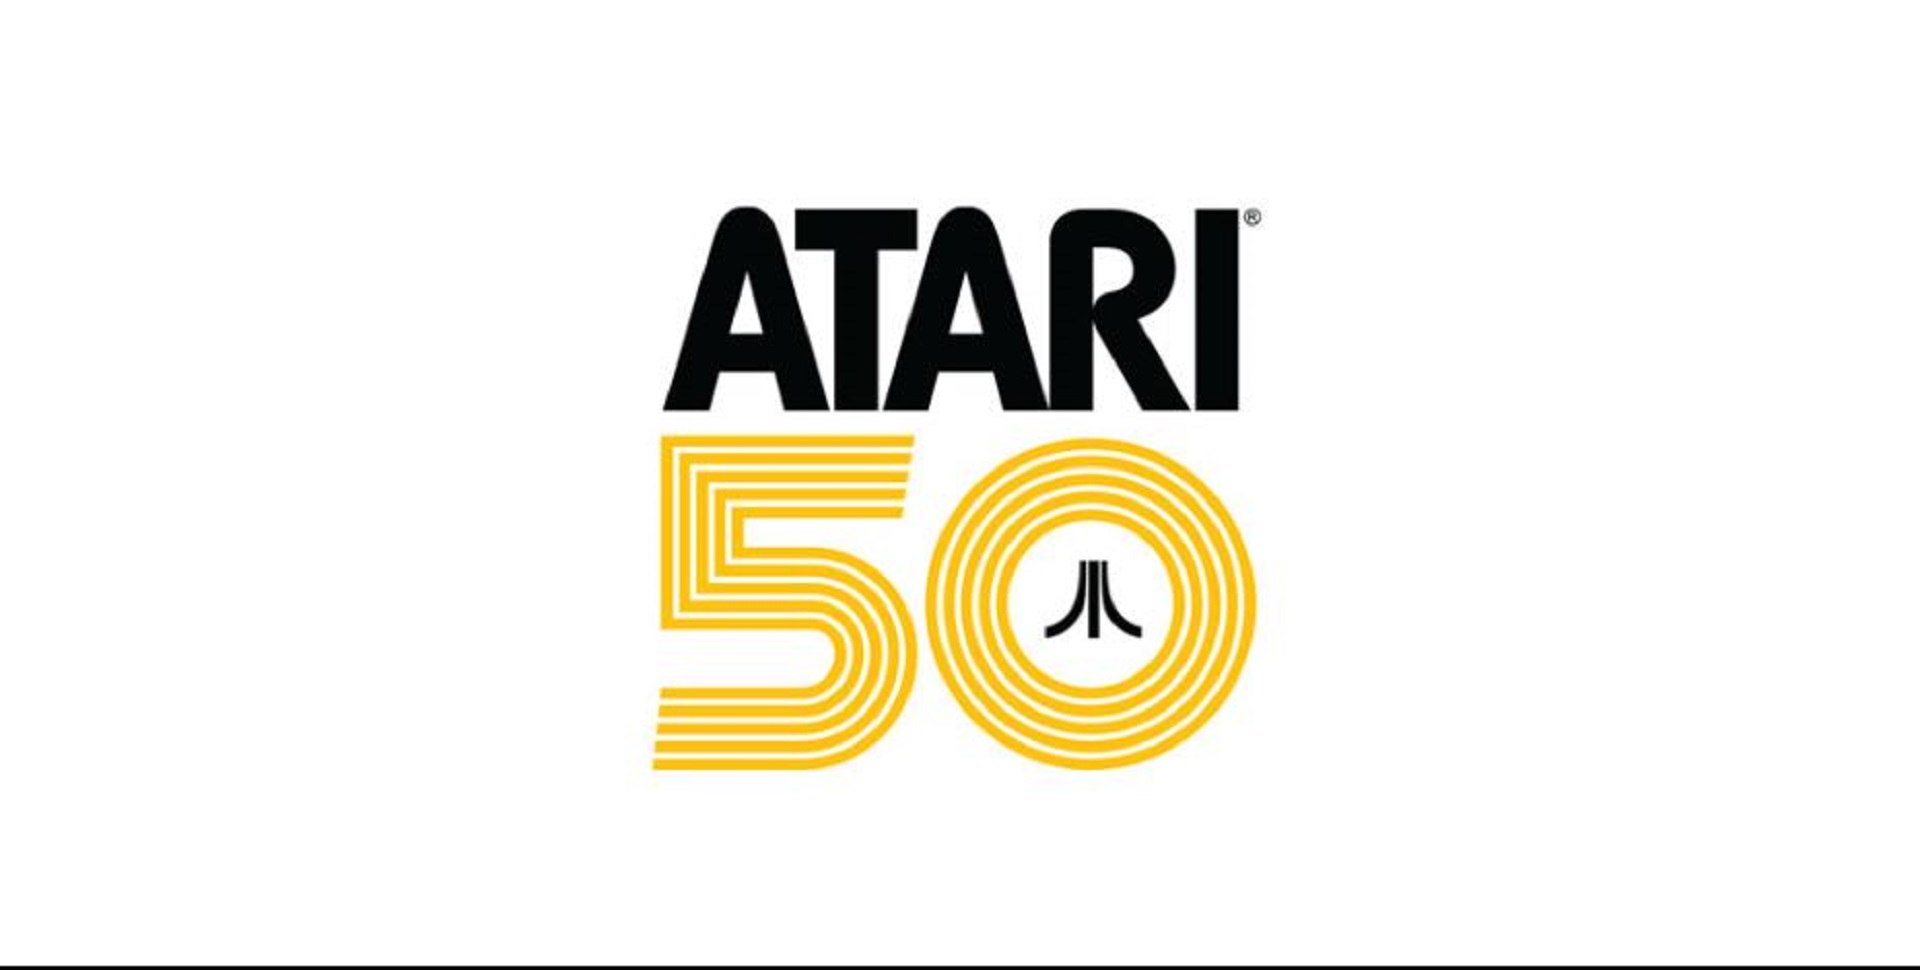 Atari feiert 50-jähriges Jubiläum mit neuem Logo